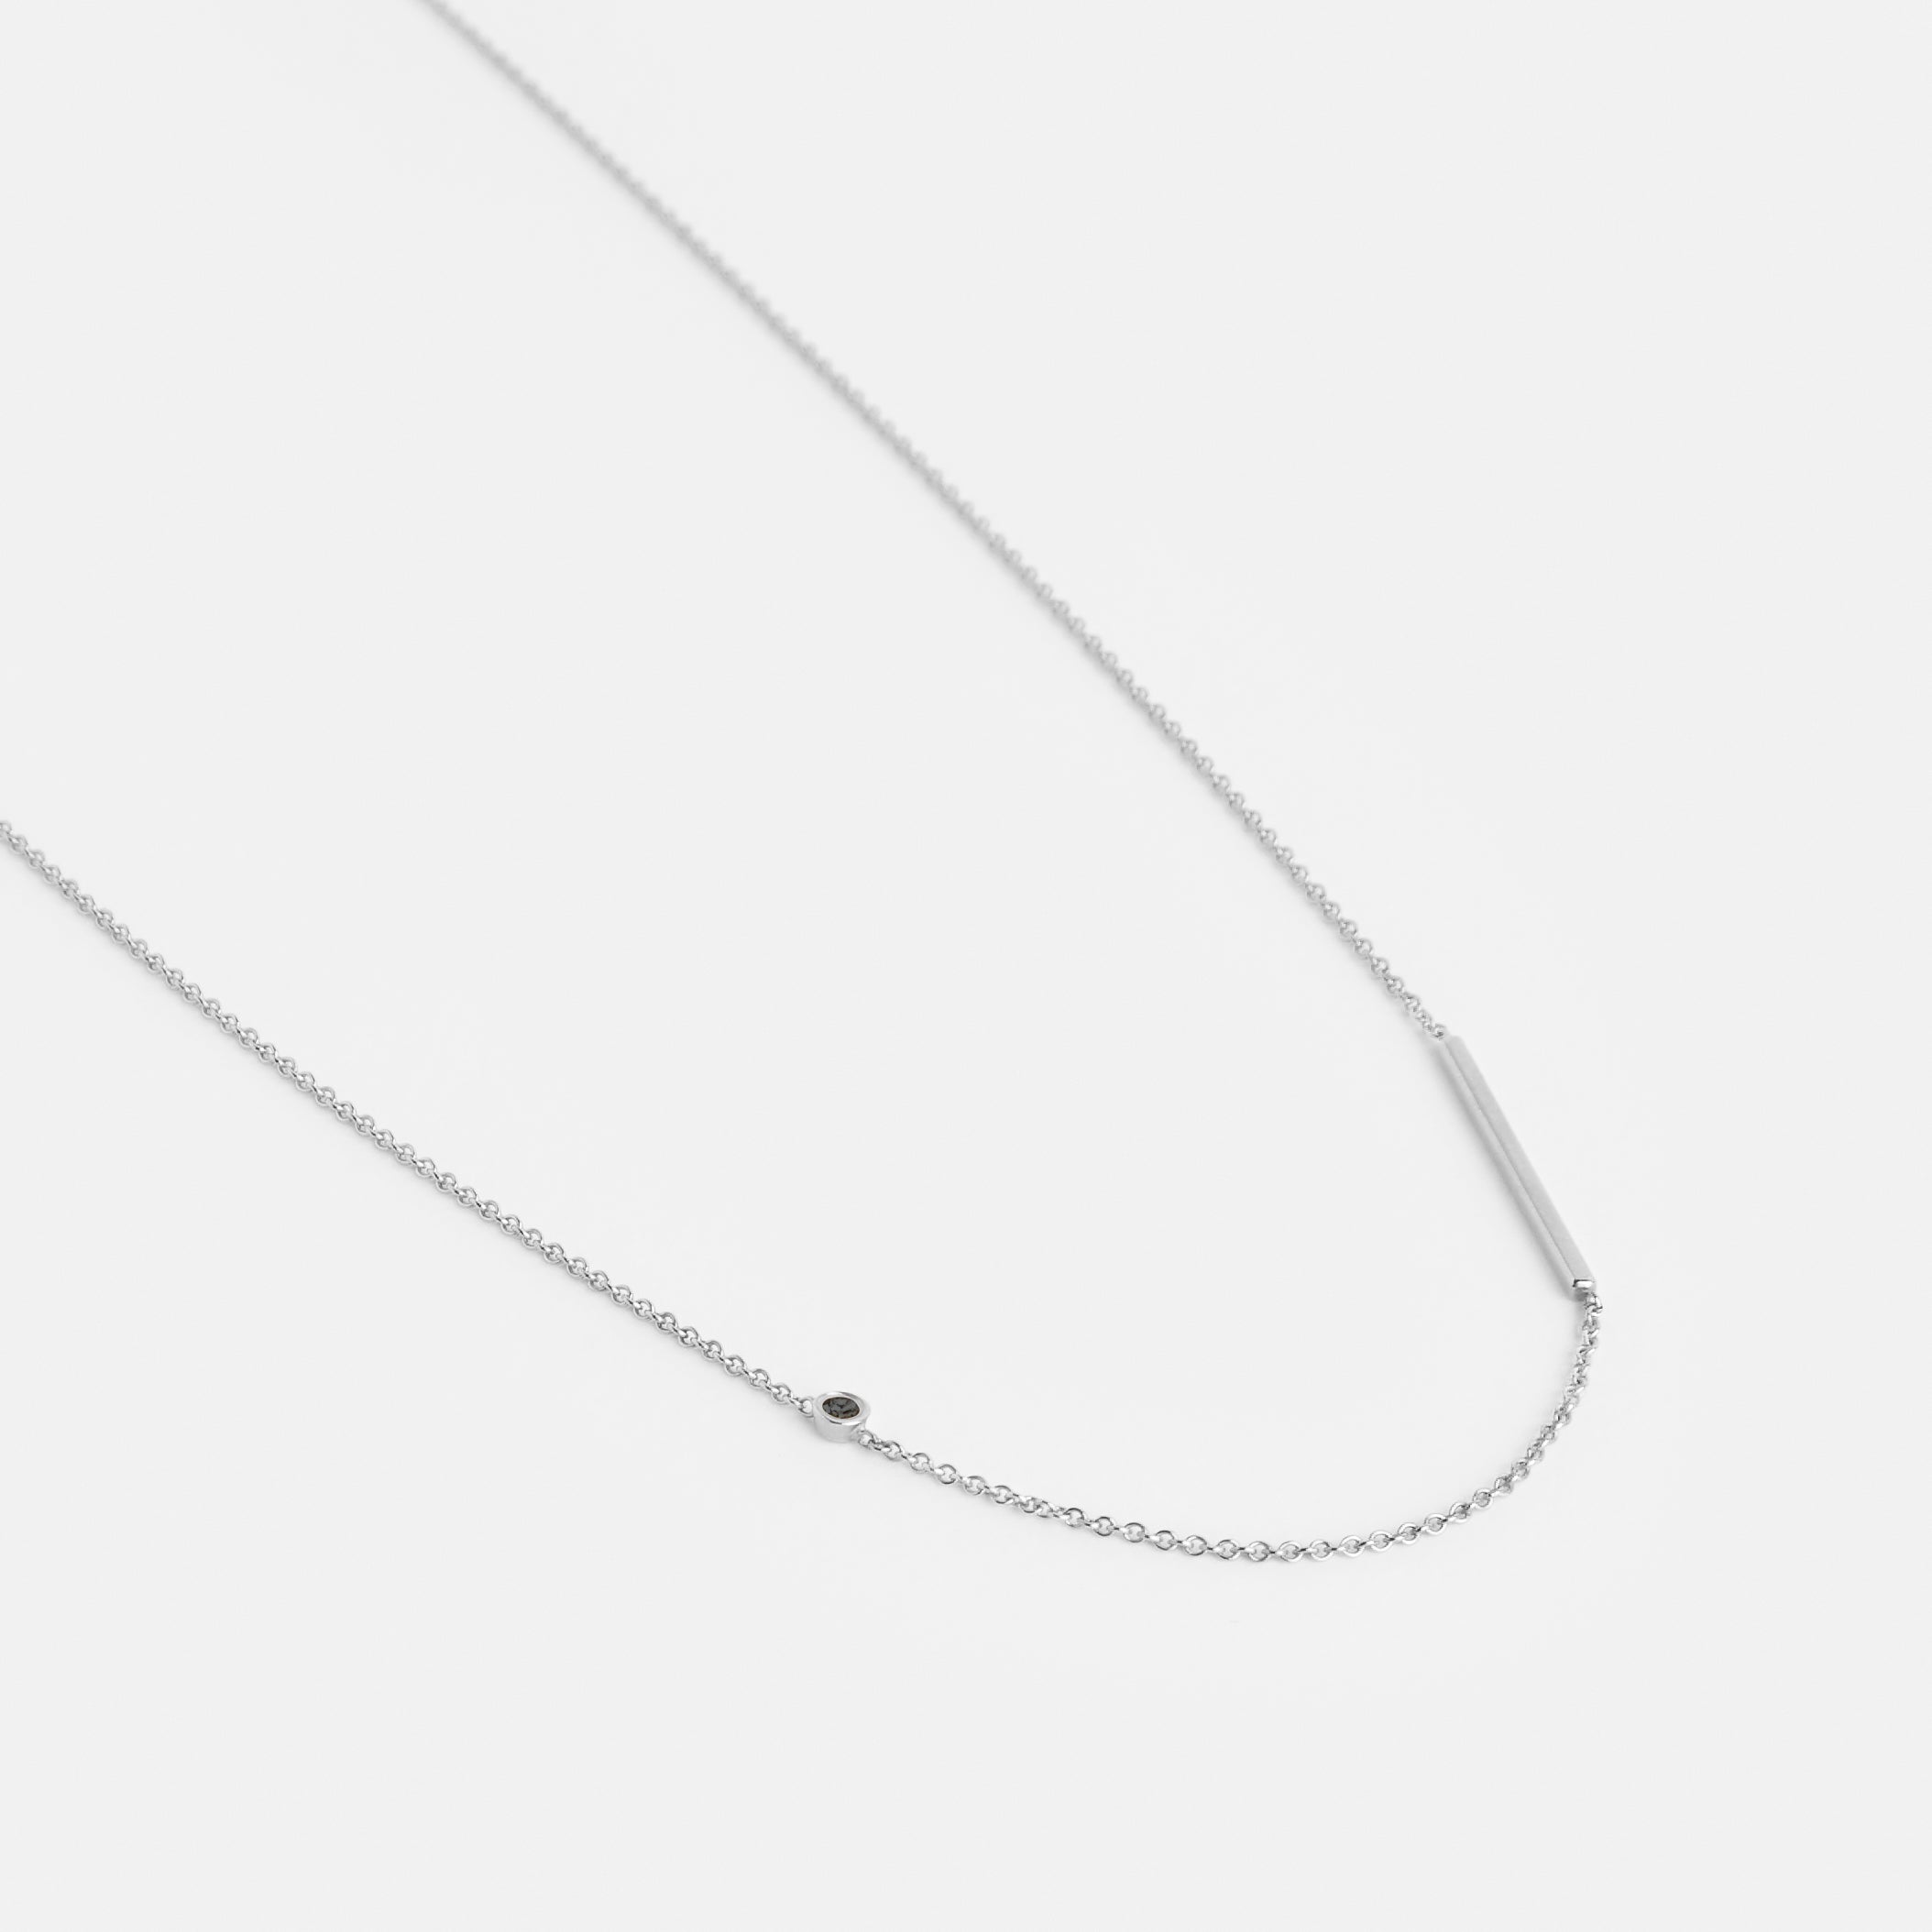 Iki Alternative Necklace in 14k White Gold set with Black Diamond By SHW Fine Jewelry New York City